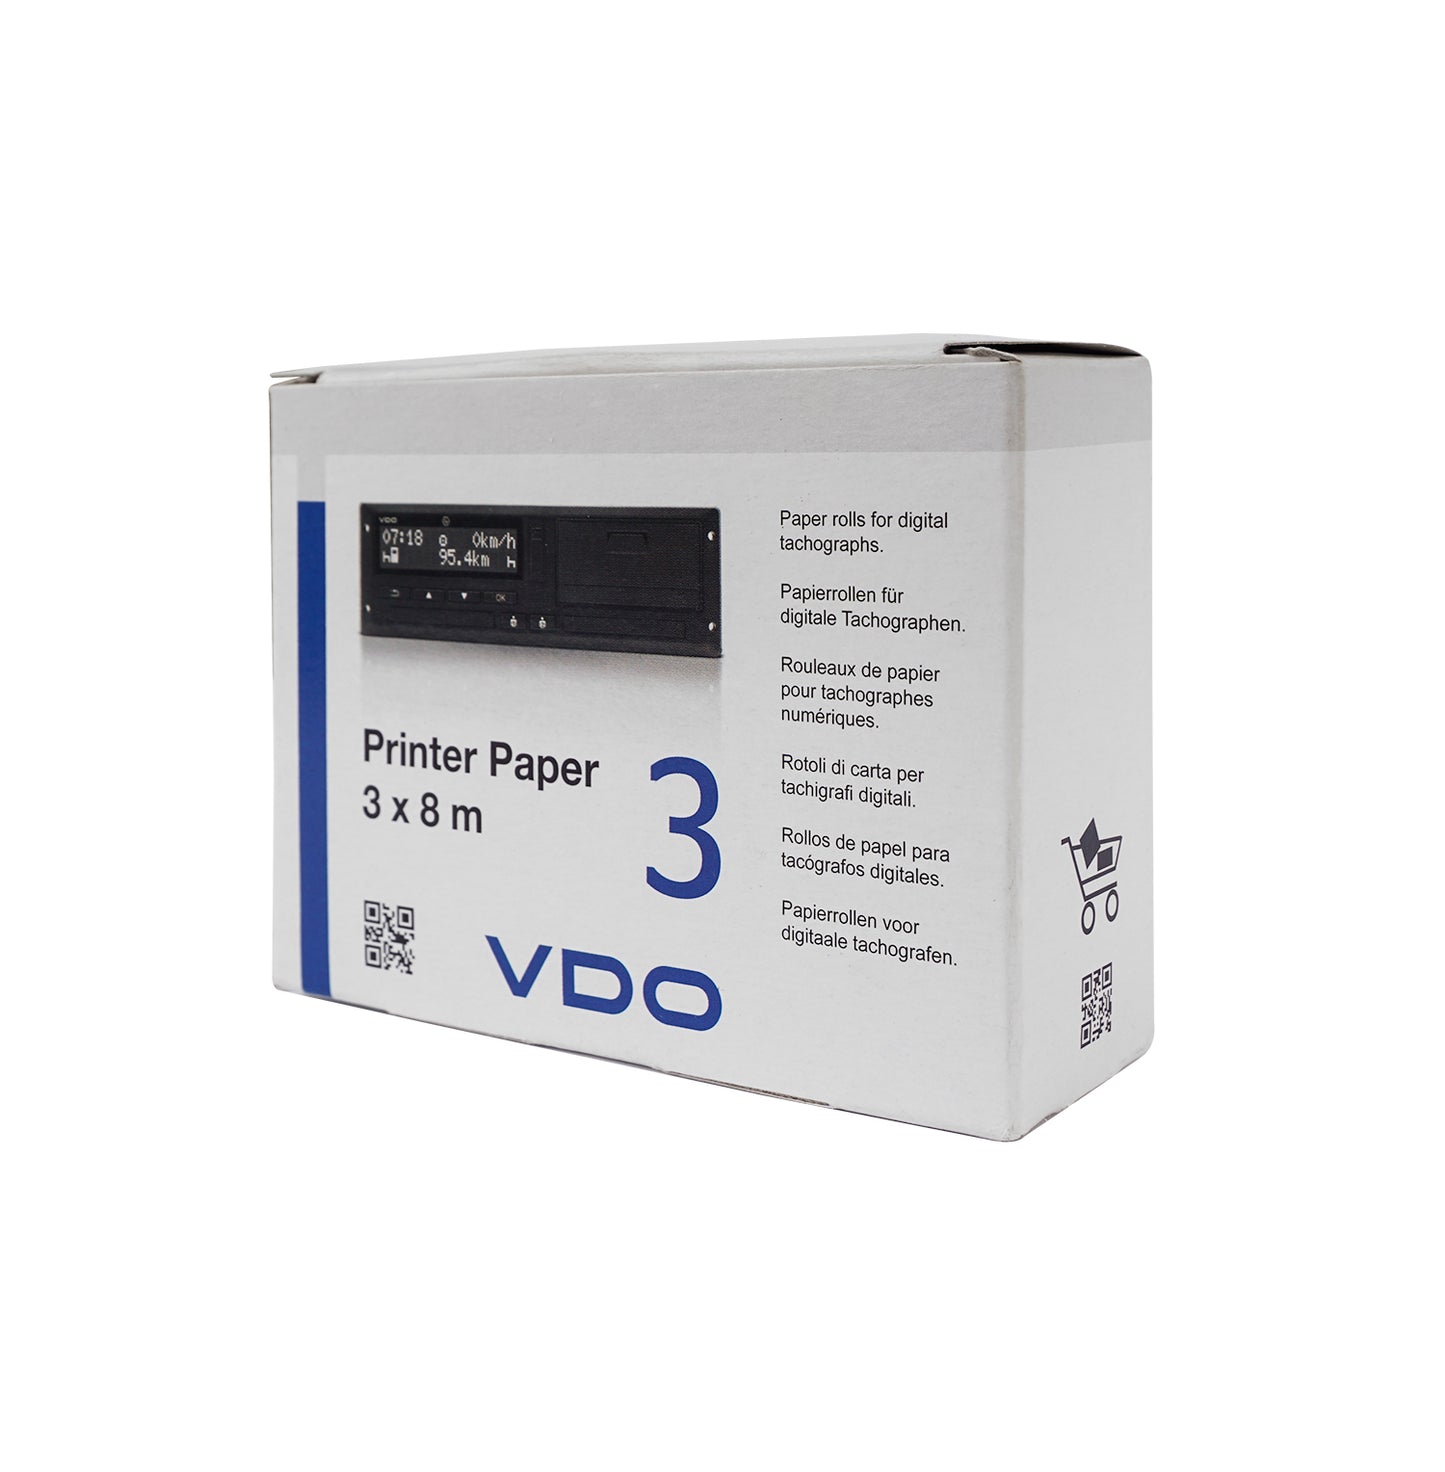 VDO Thermopapier Eco 3X8M Rollen für Digitale Tachographen | 2910002792400